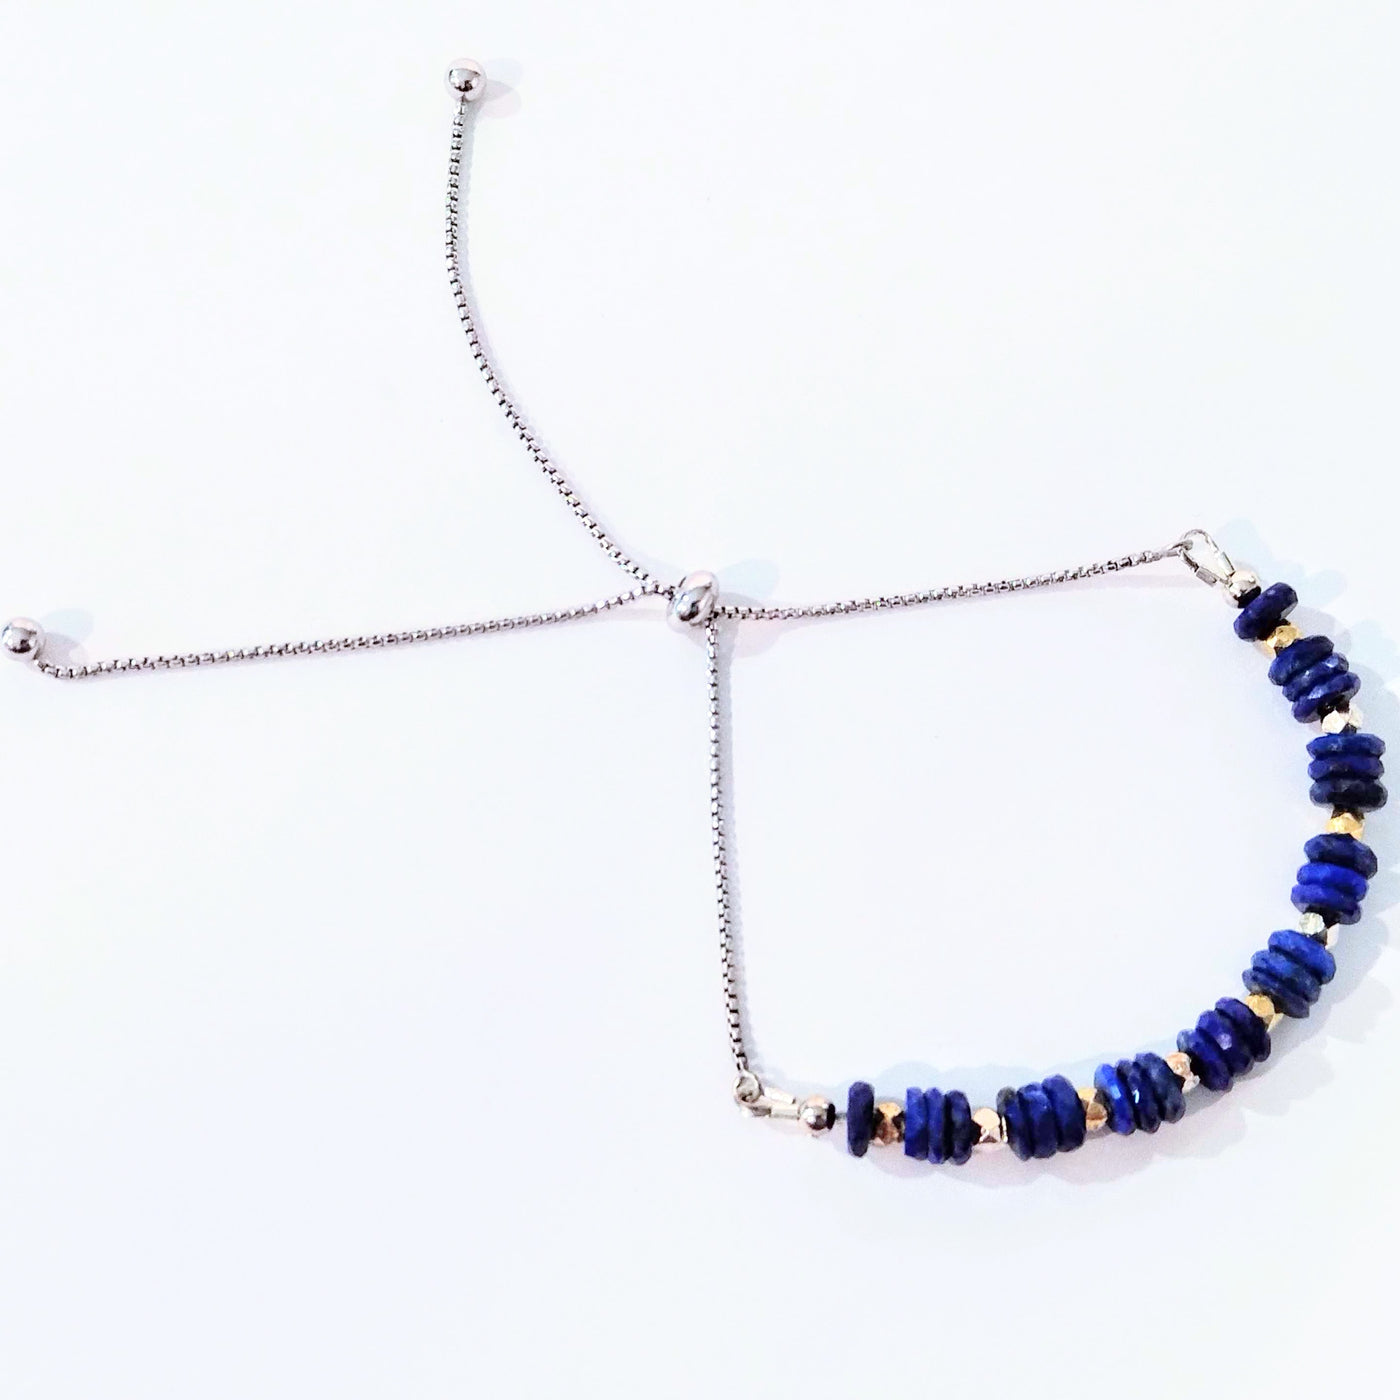 SM-316 SS Adjustable Bracelet with Faceted Lapis Lazuli